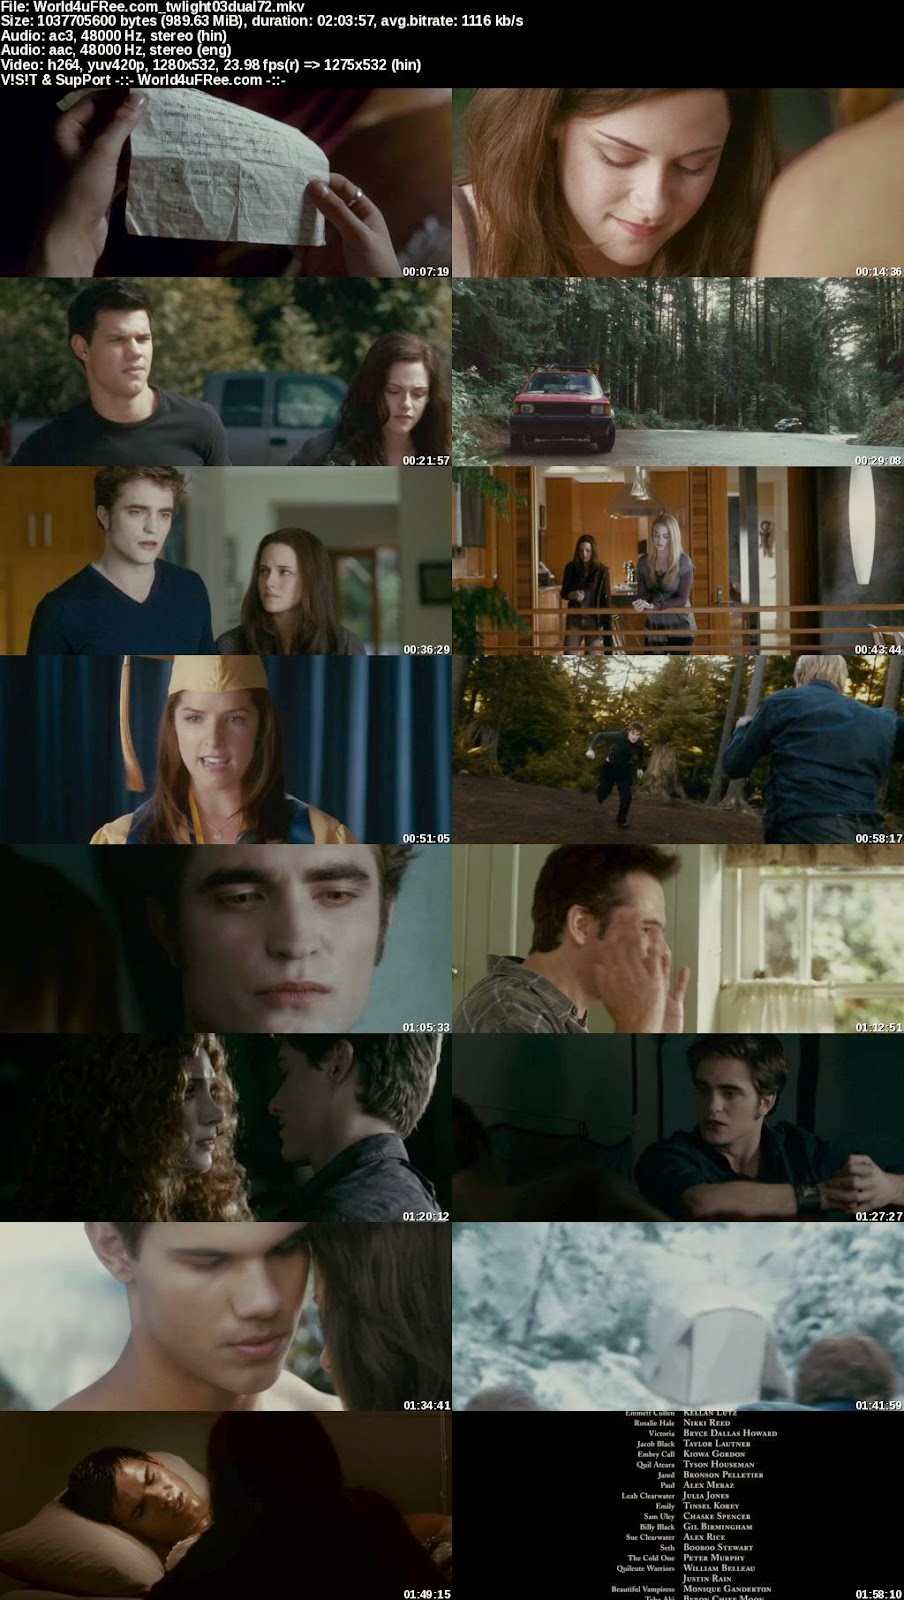 Twilight part 2 full movie in hindi download 720p